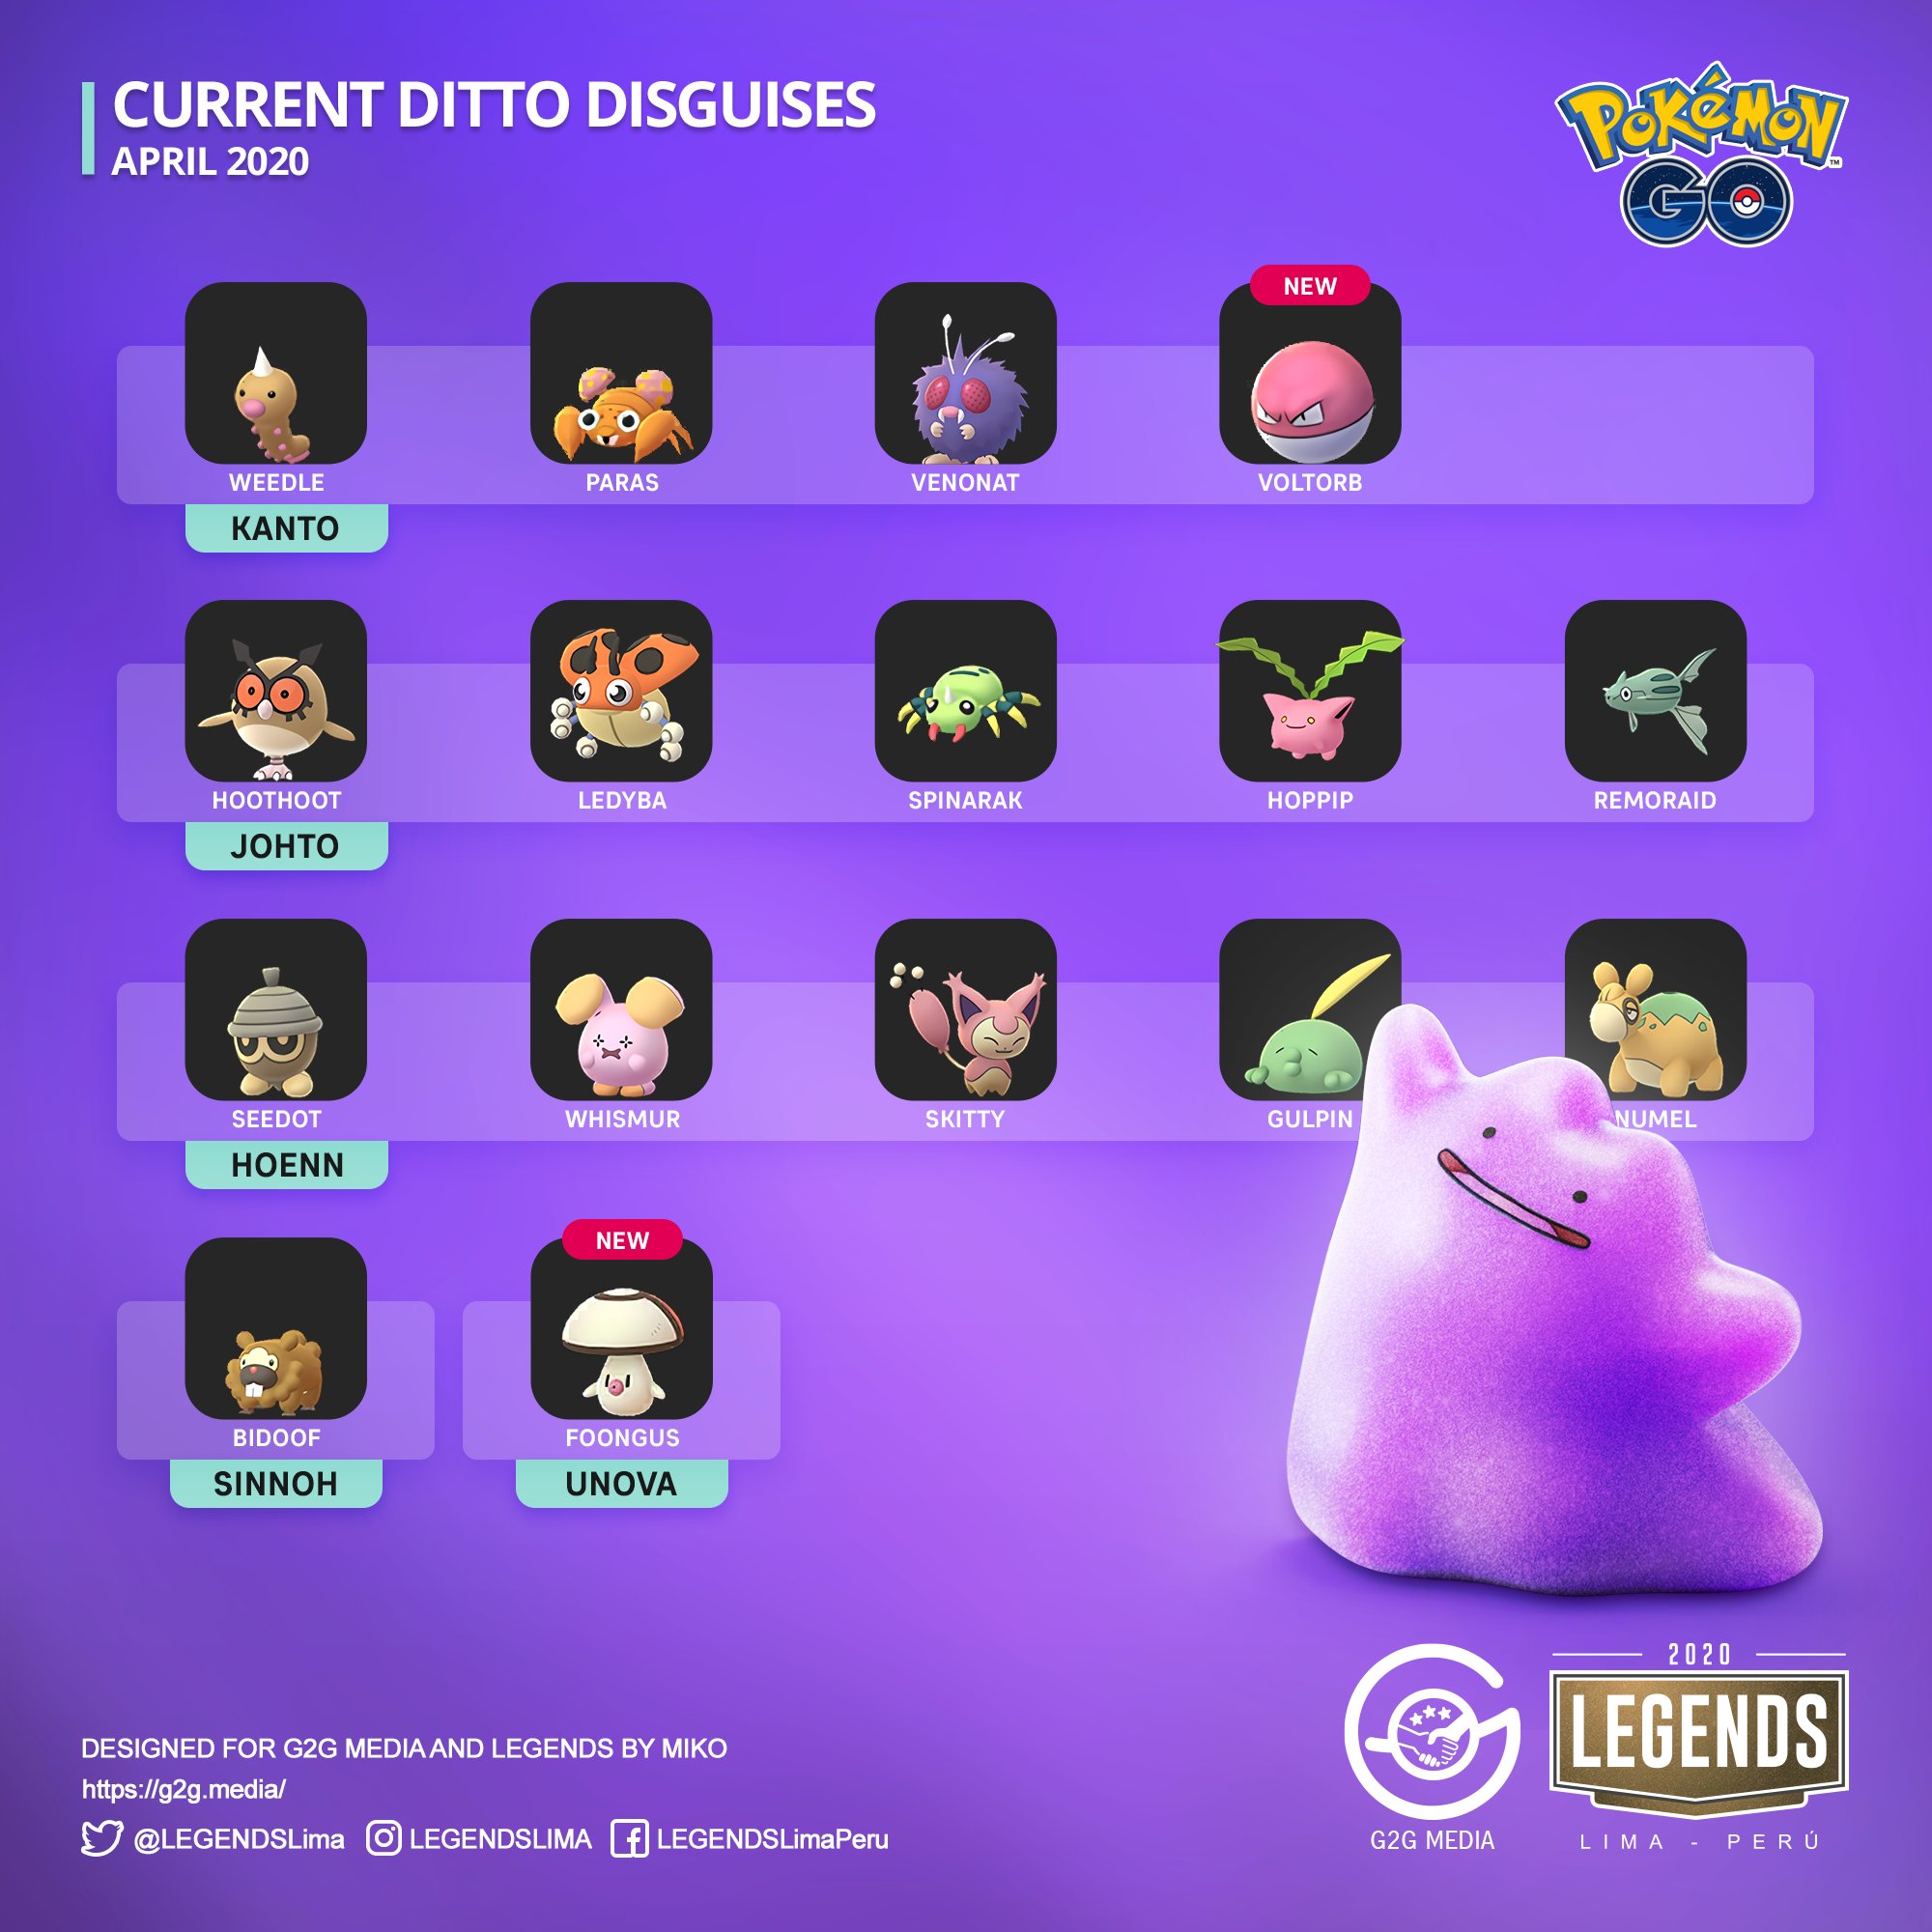 Pokemon Go: All Ditto disguises revealed (October/November 2019) - Dexerto